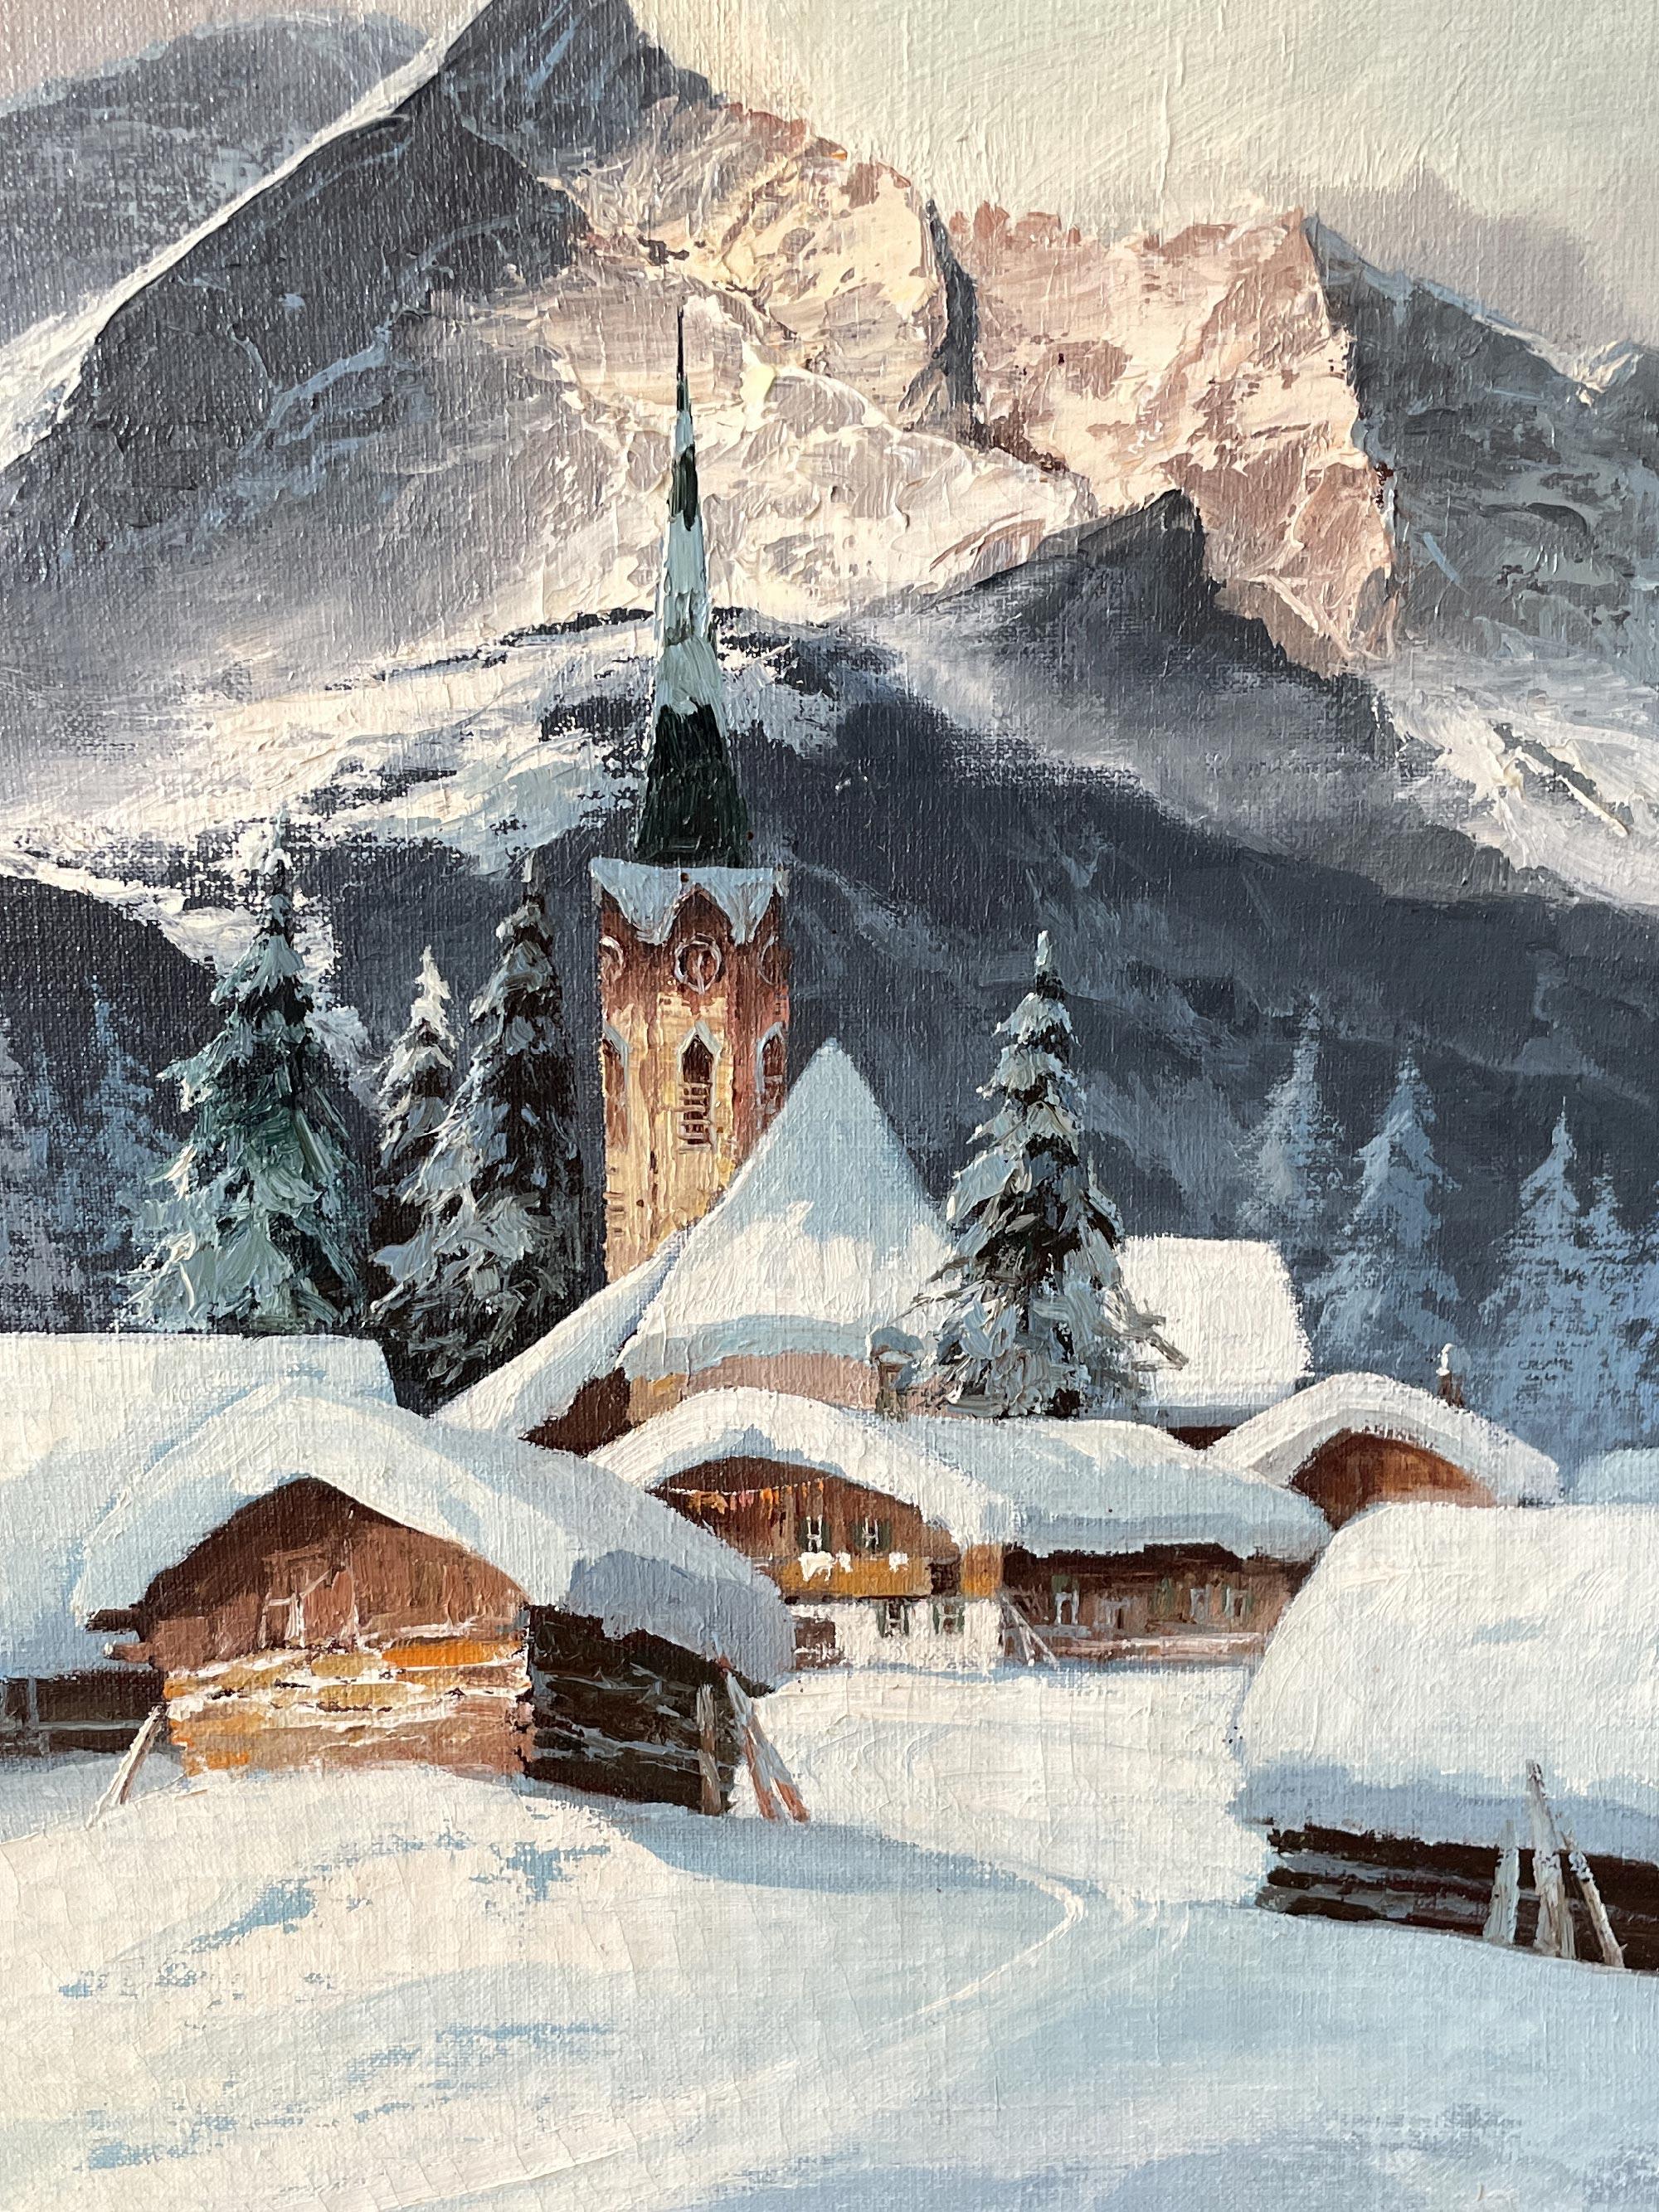 Snowy Landscape by Arno Lemke Oil on Canvas, 1950 4